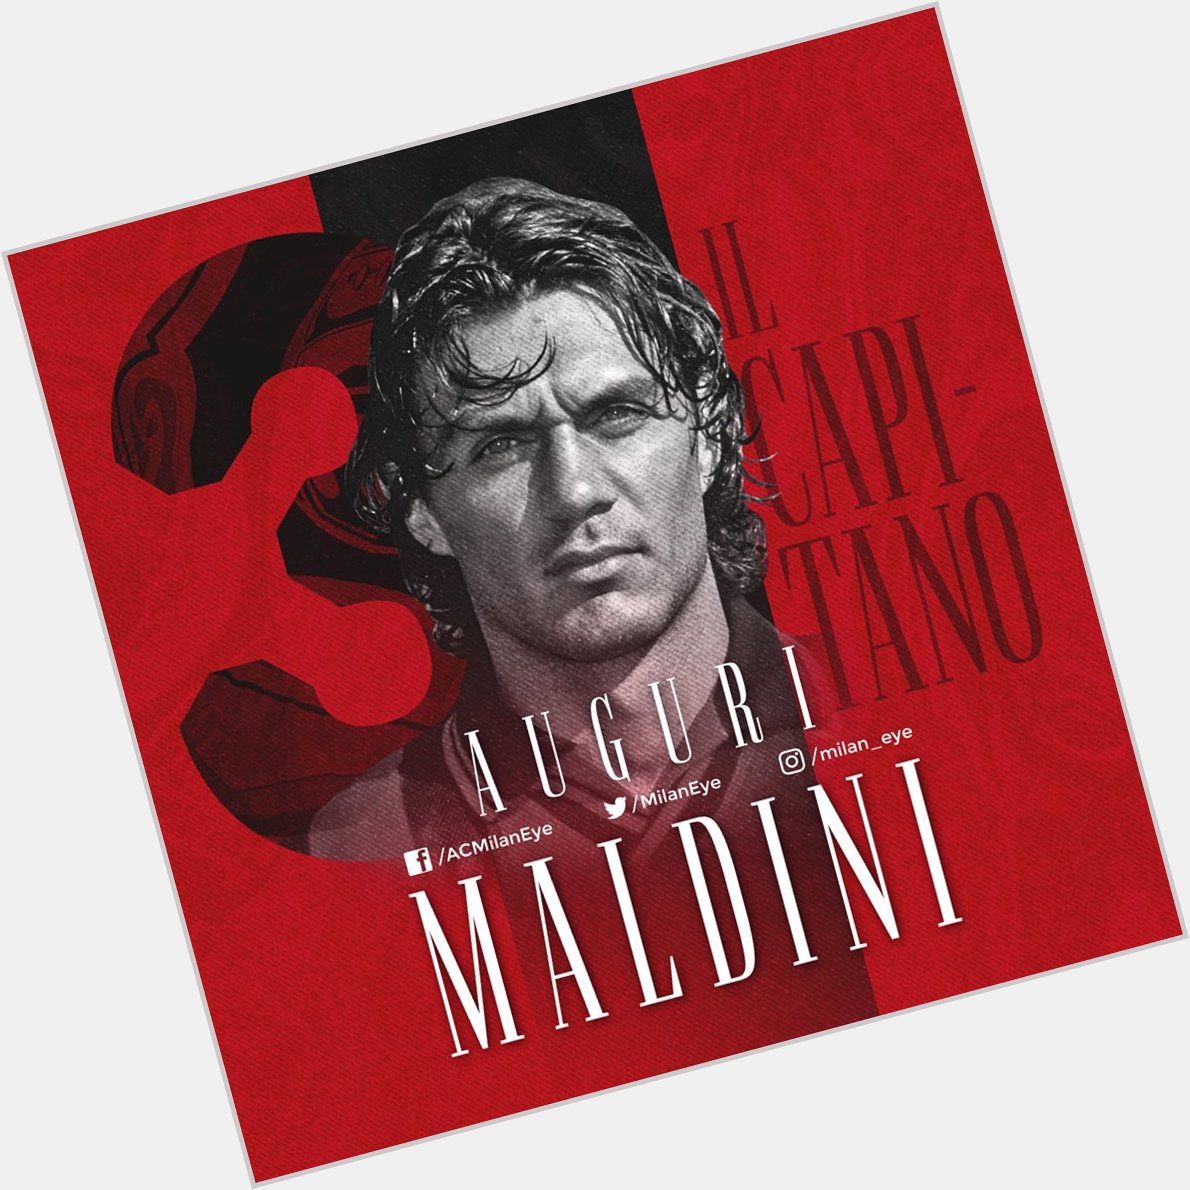 A Very Happy 49th Birthday to the Great Paolo Maldini! 